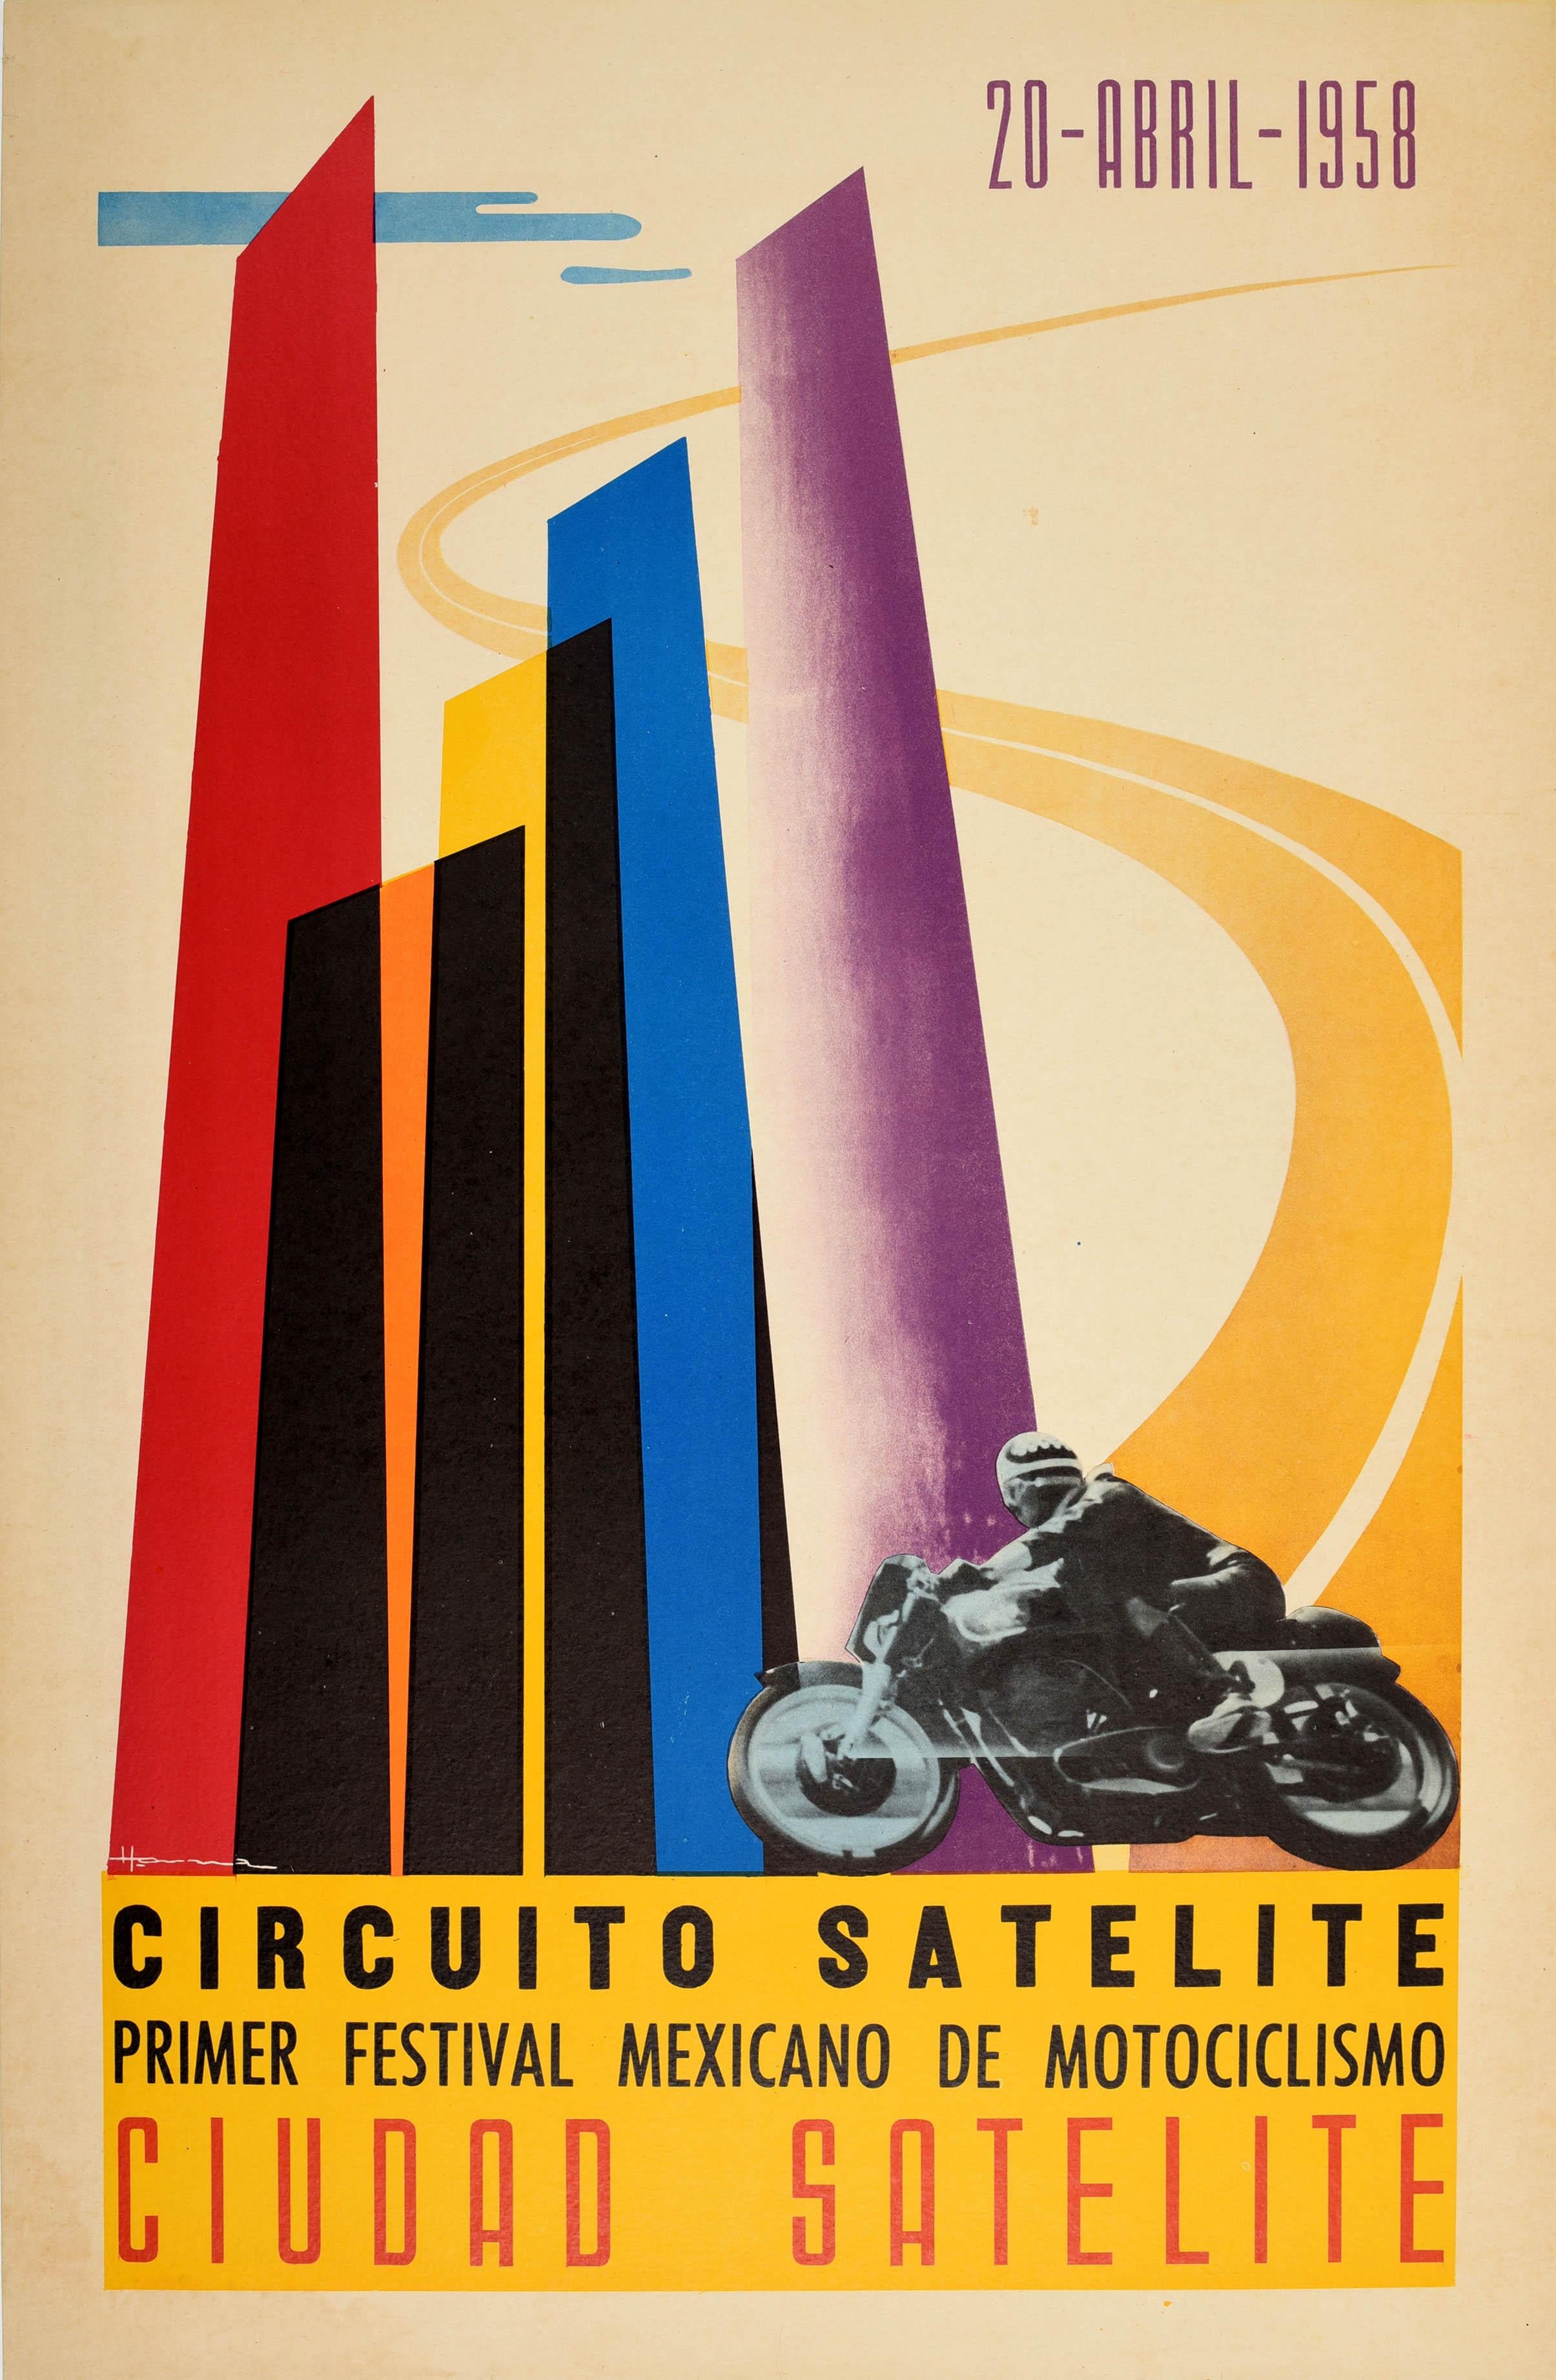 Jose Horna Print - Original Vintage Poster Circuito Satelite Towers Mexico Motorcycle Race Festival